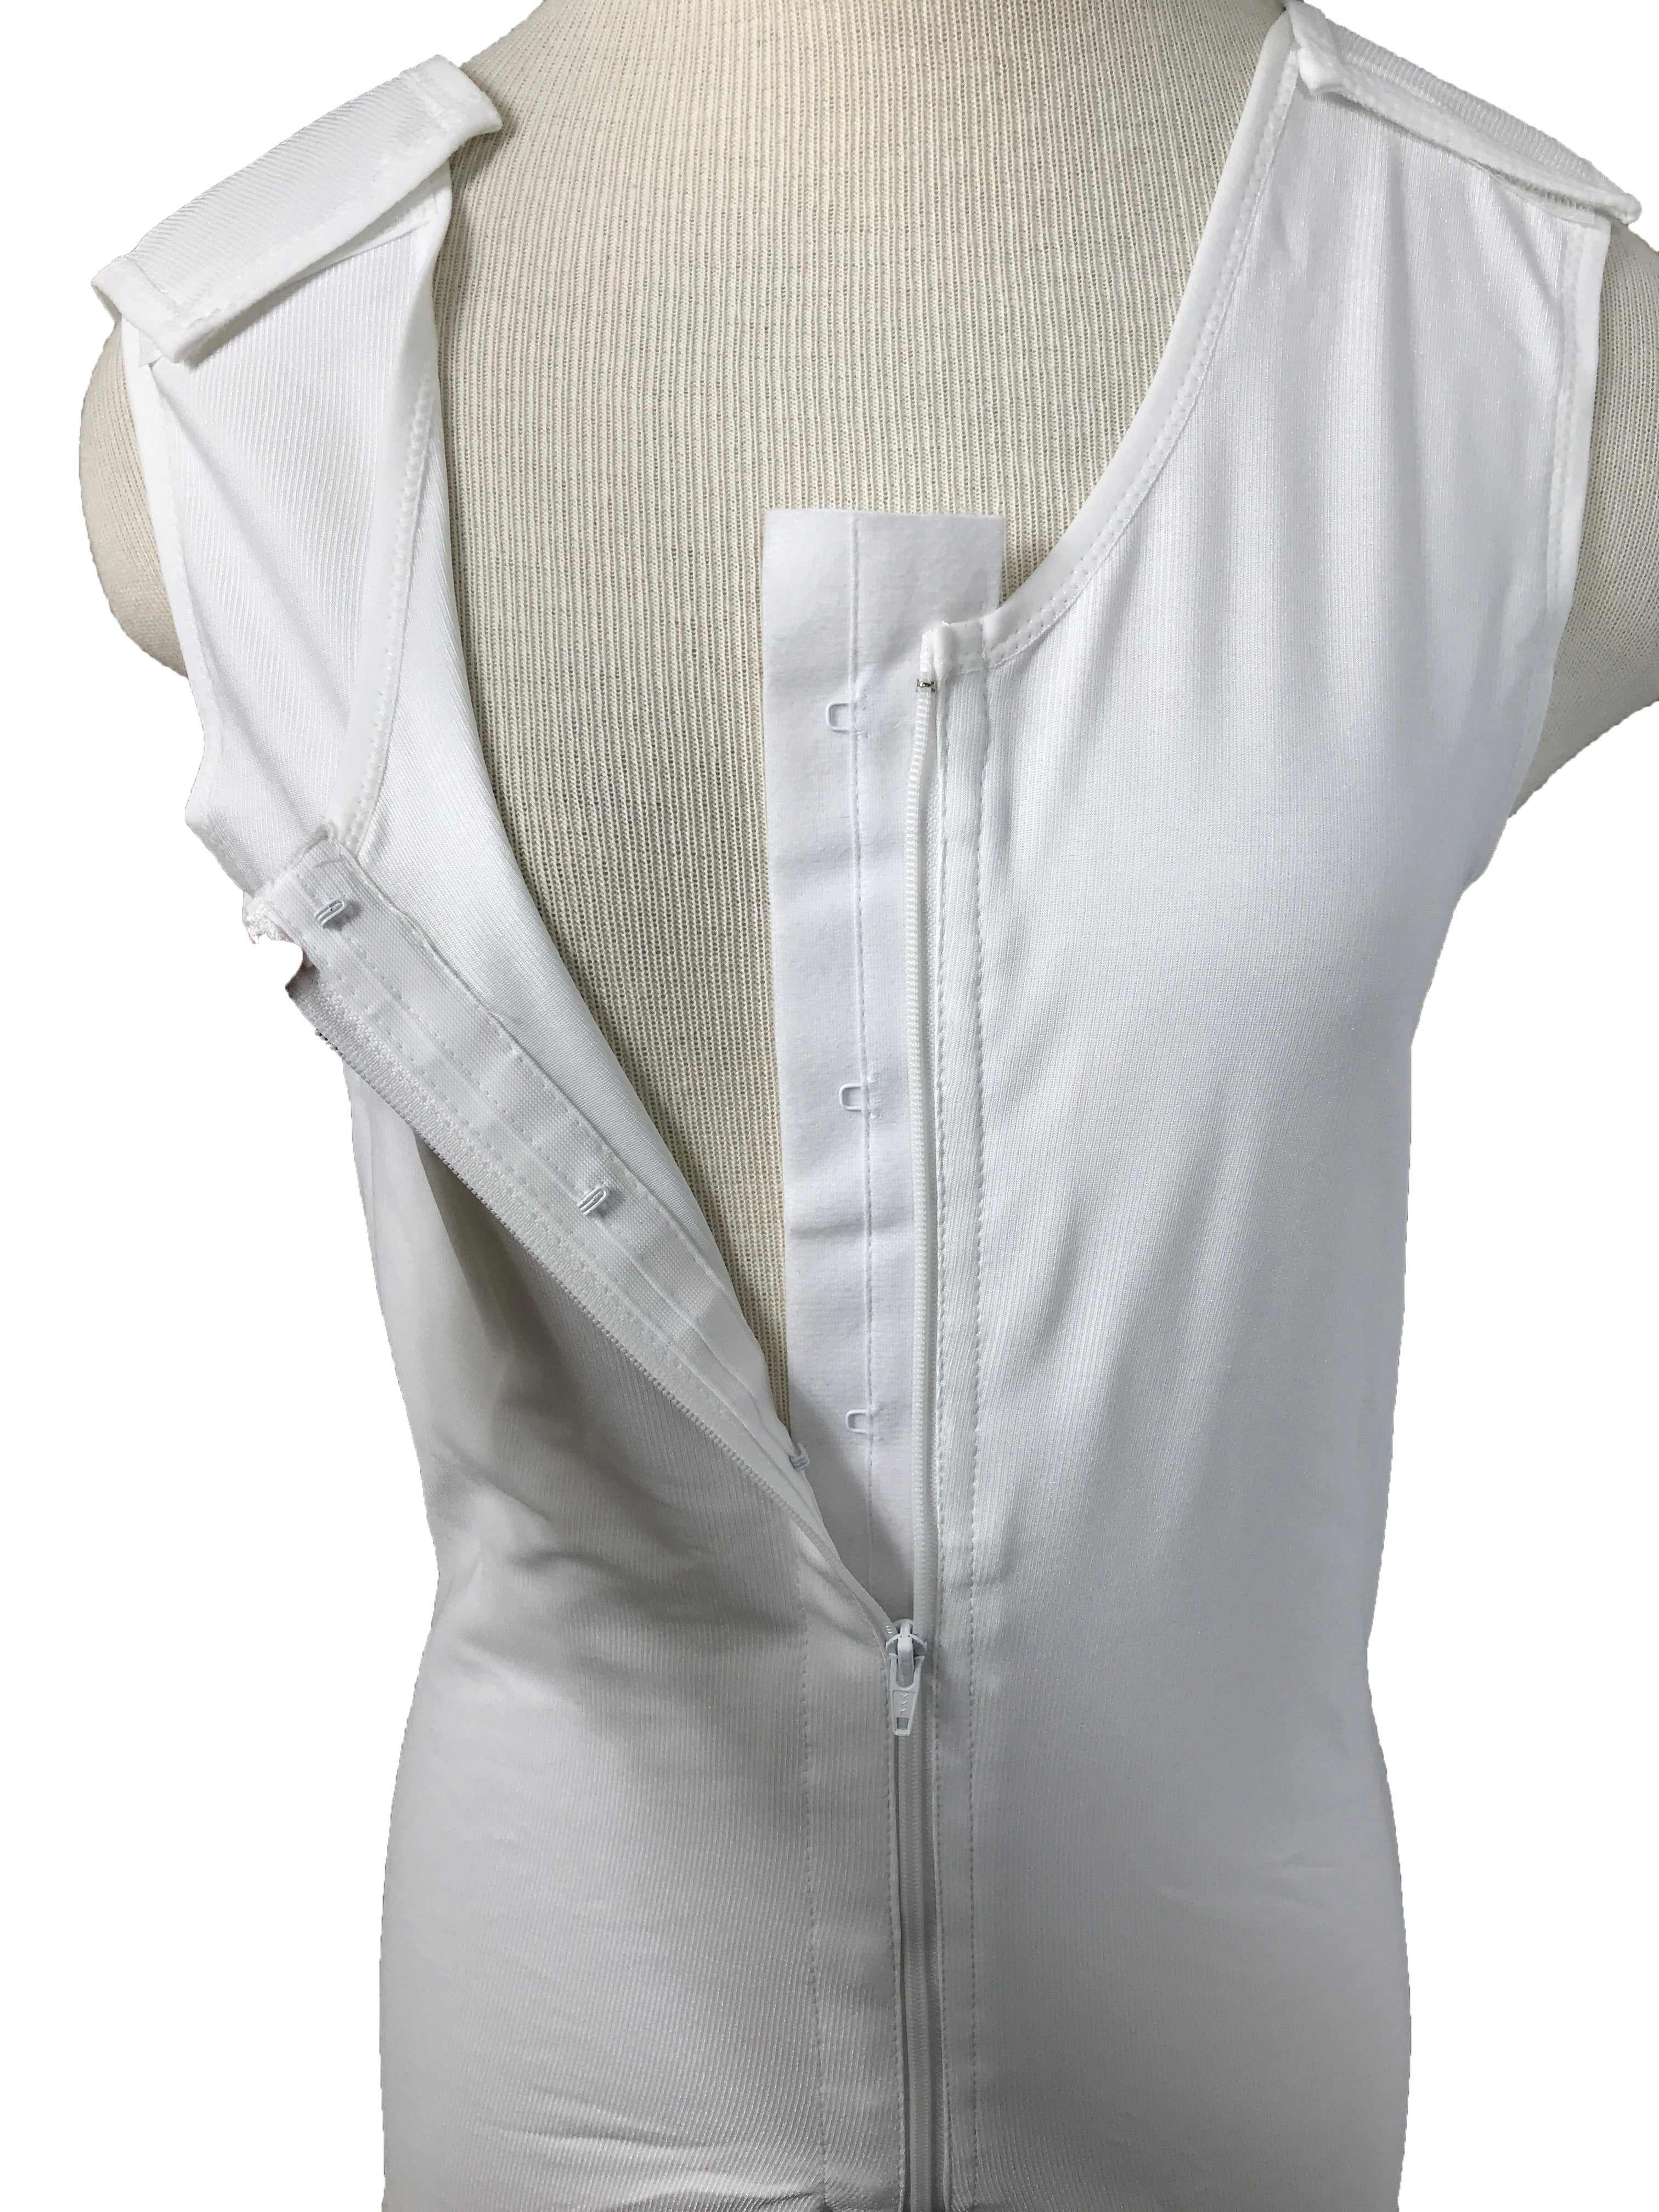 Marena ComfortWear Compression and Support Garment White Bodysuit Men's Size 3XL